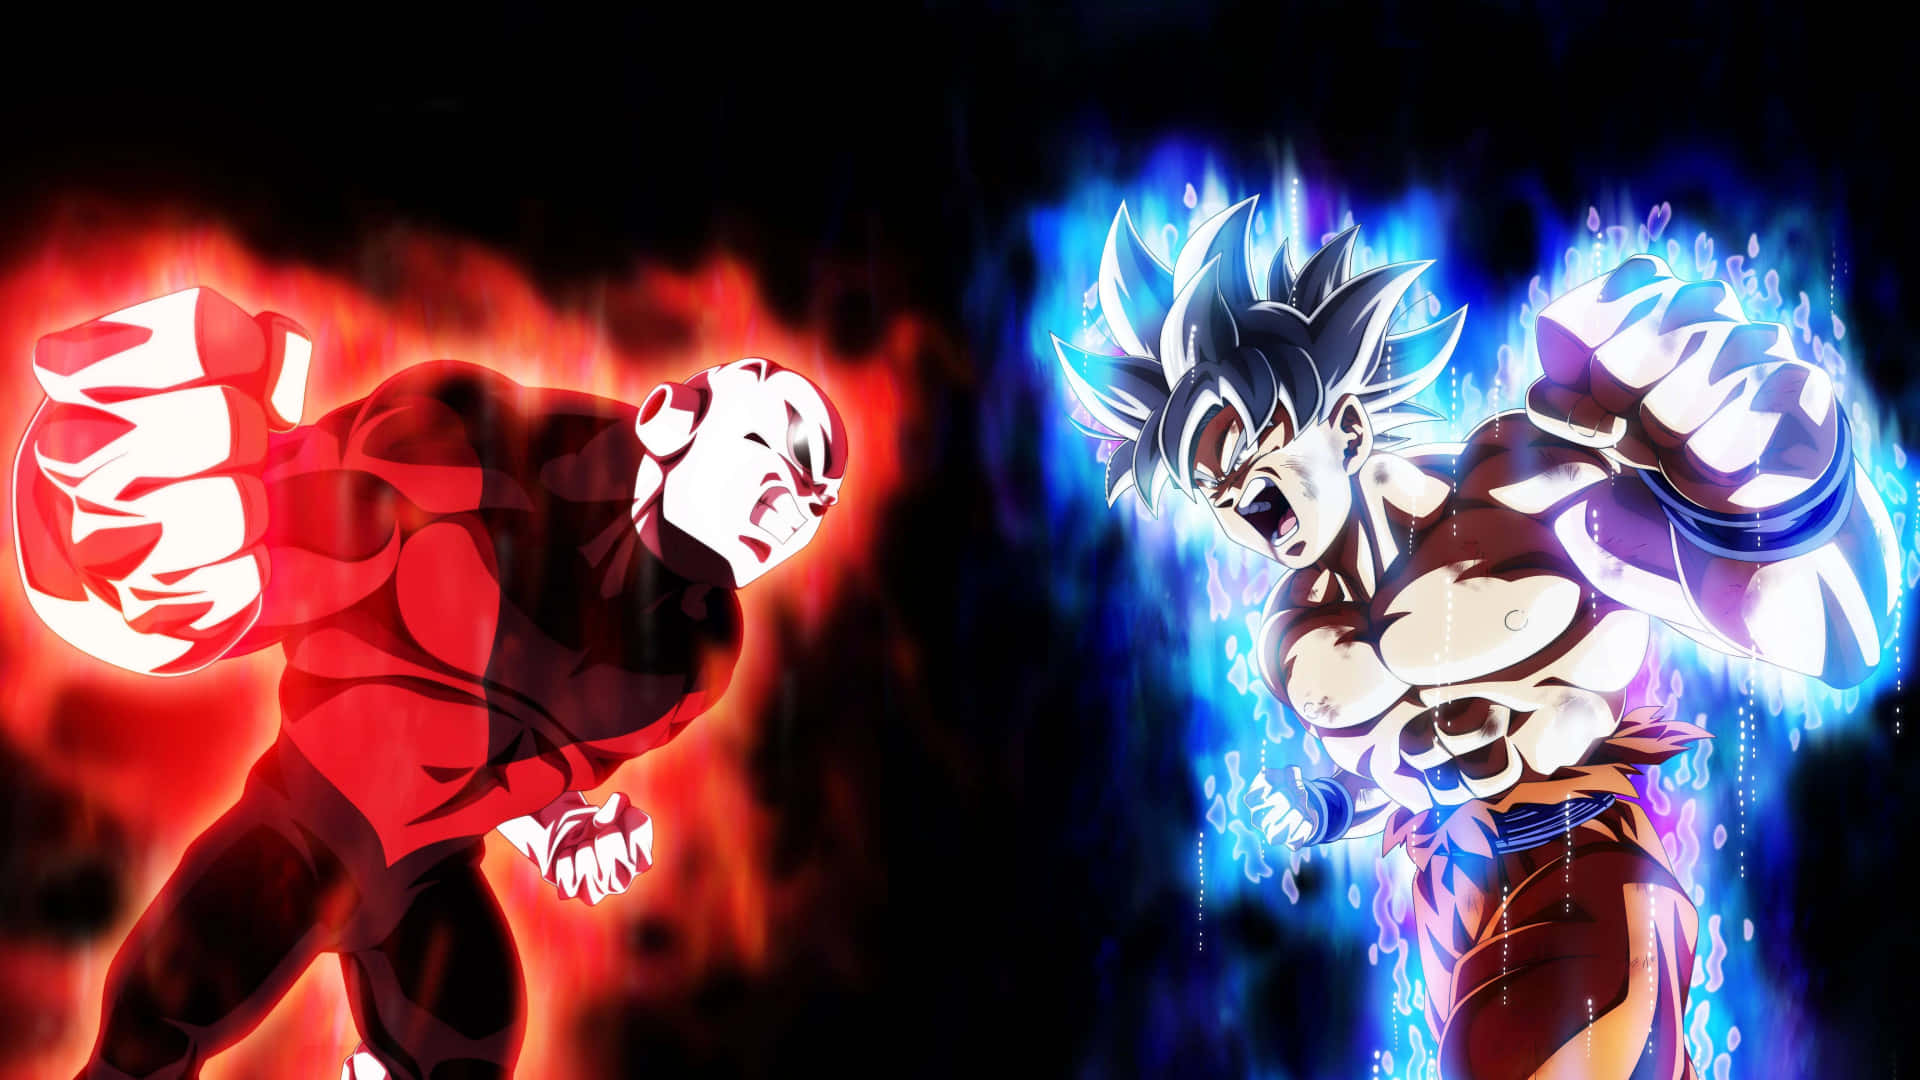 Imagende Jiren Vs. Goku En Dragon Ball Super